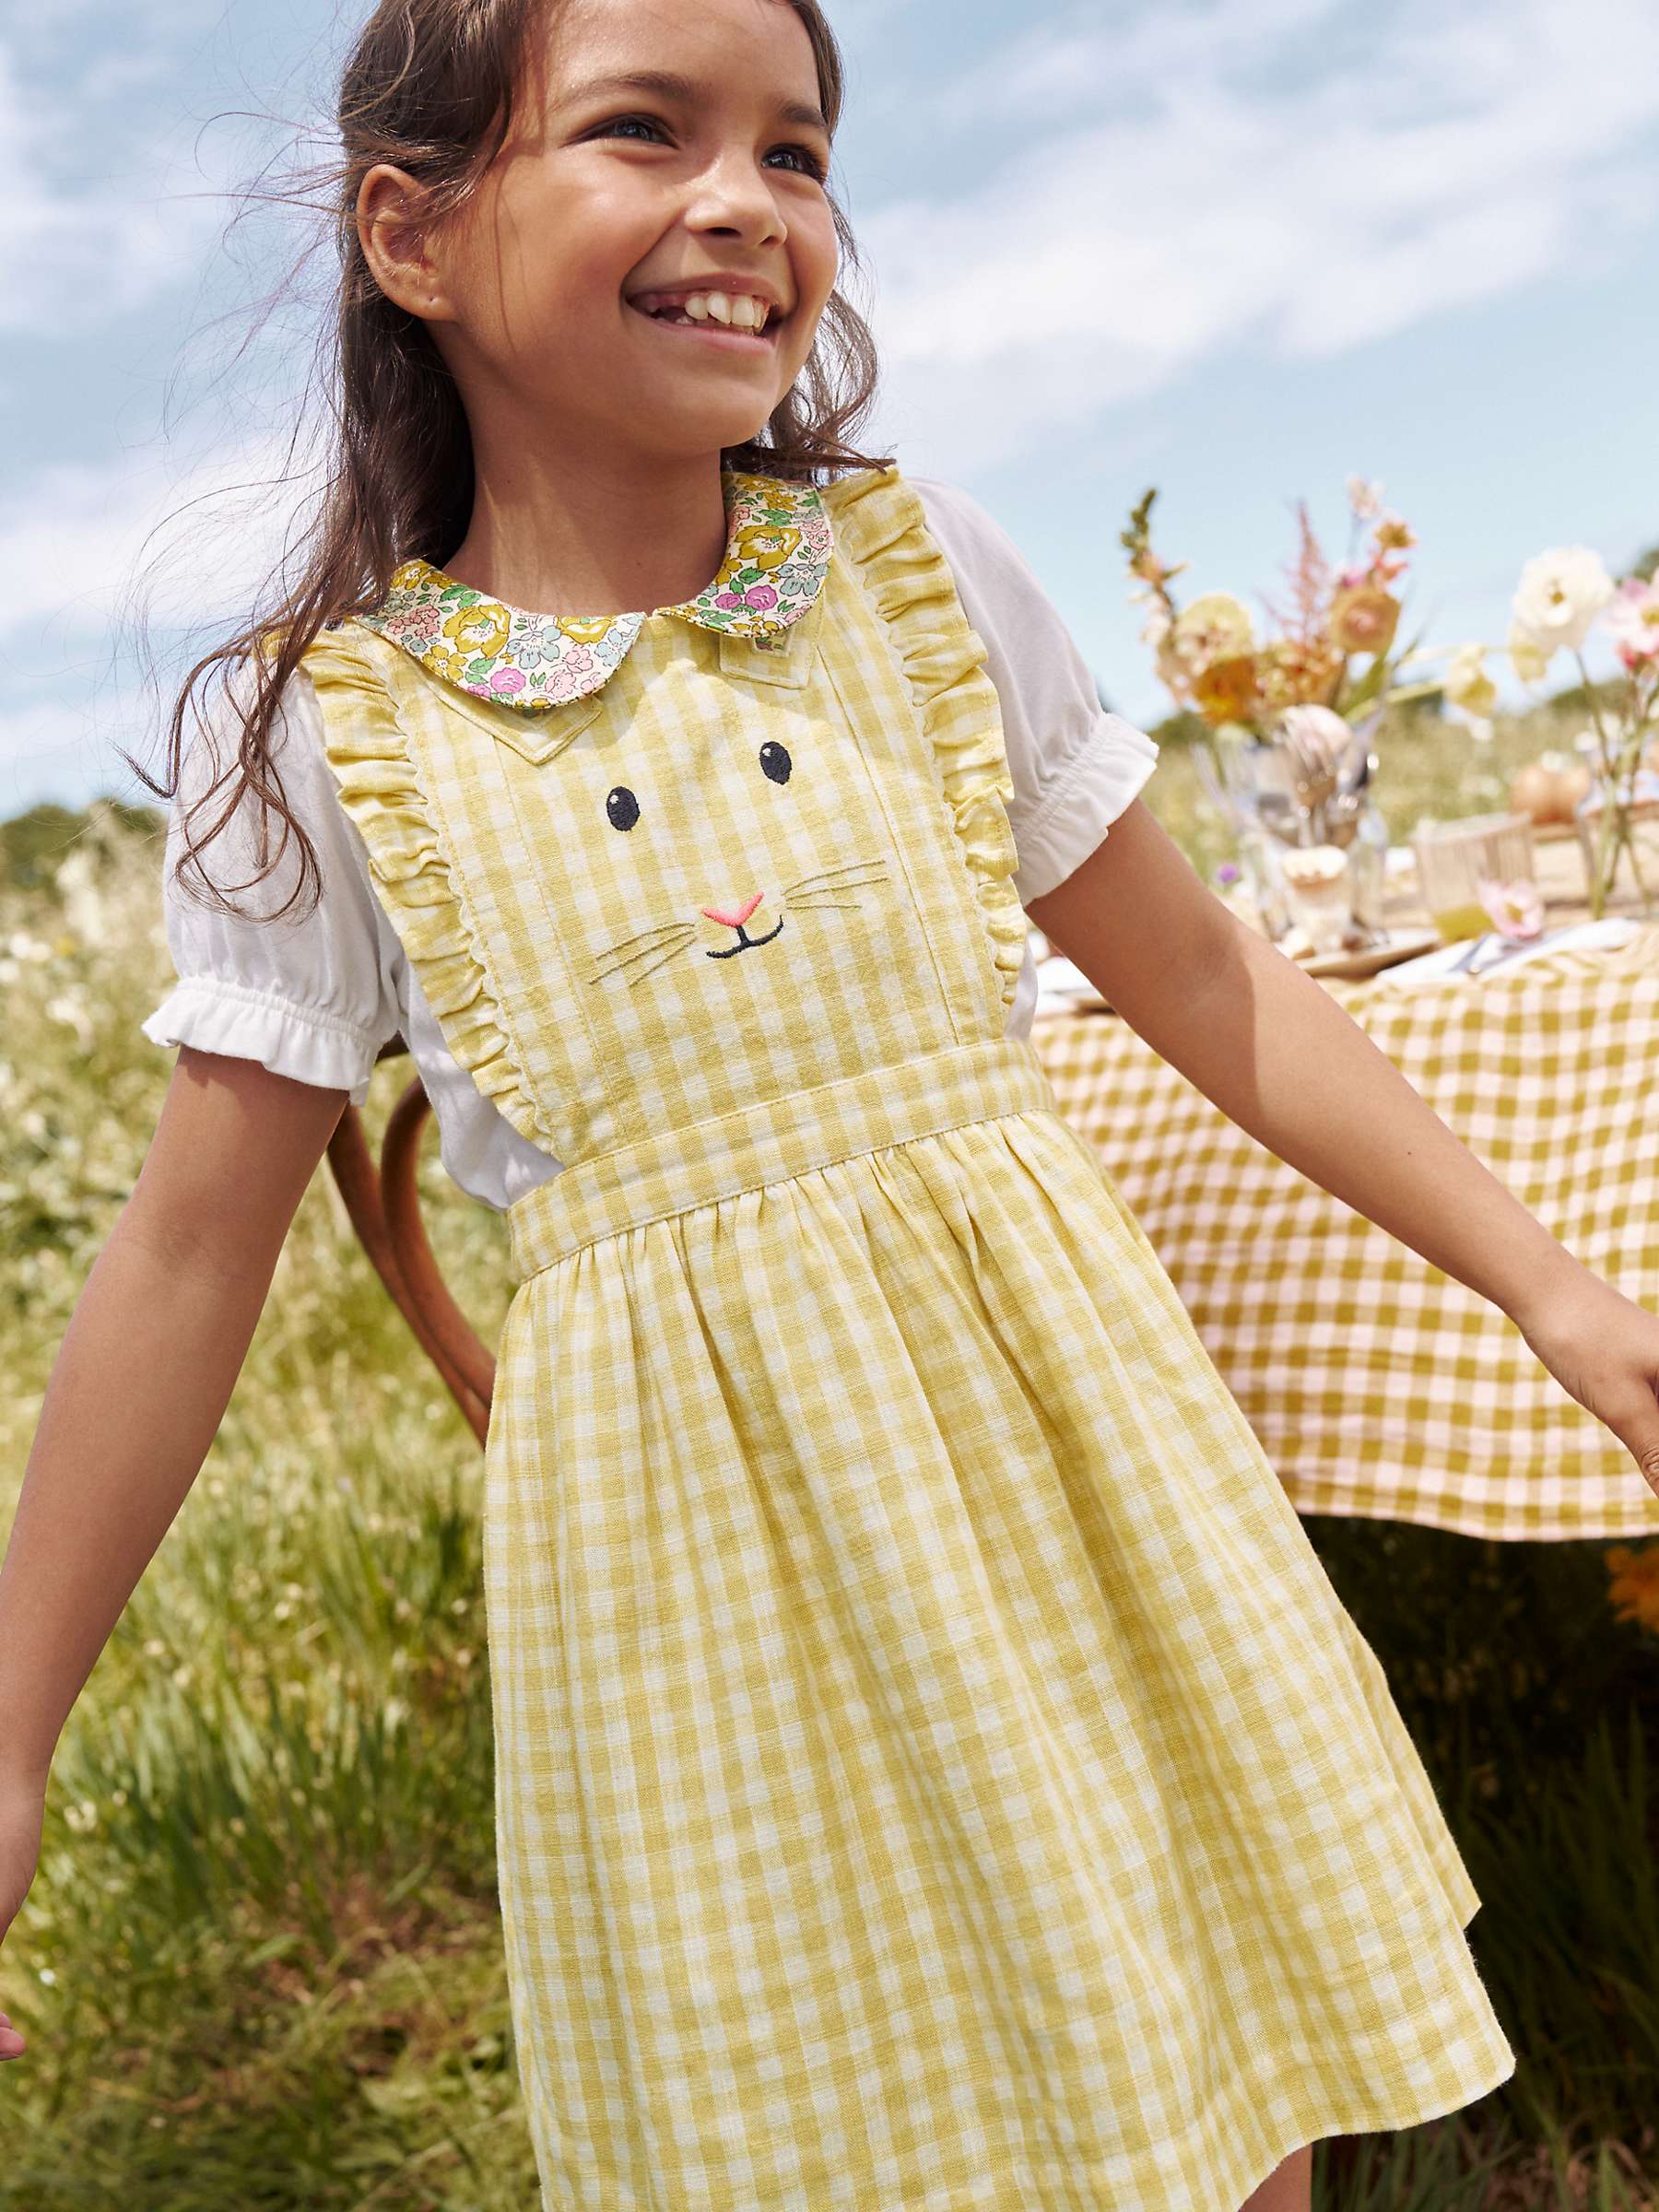 Buy Mini Boden Kids' Charming Bunny Pinafore Dress, Honey/Ivory Online at johnlewis.com